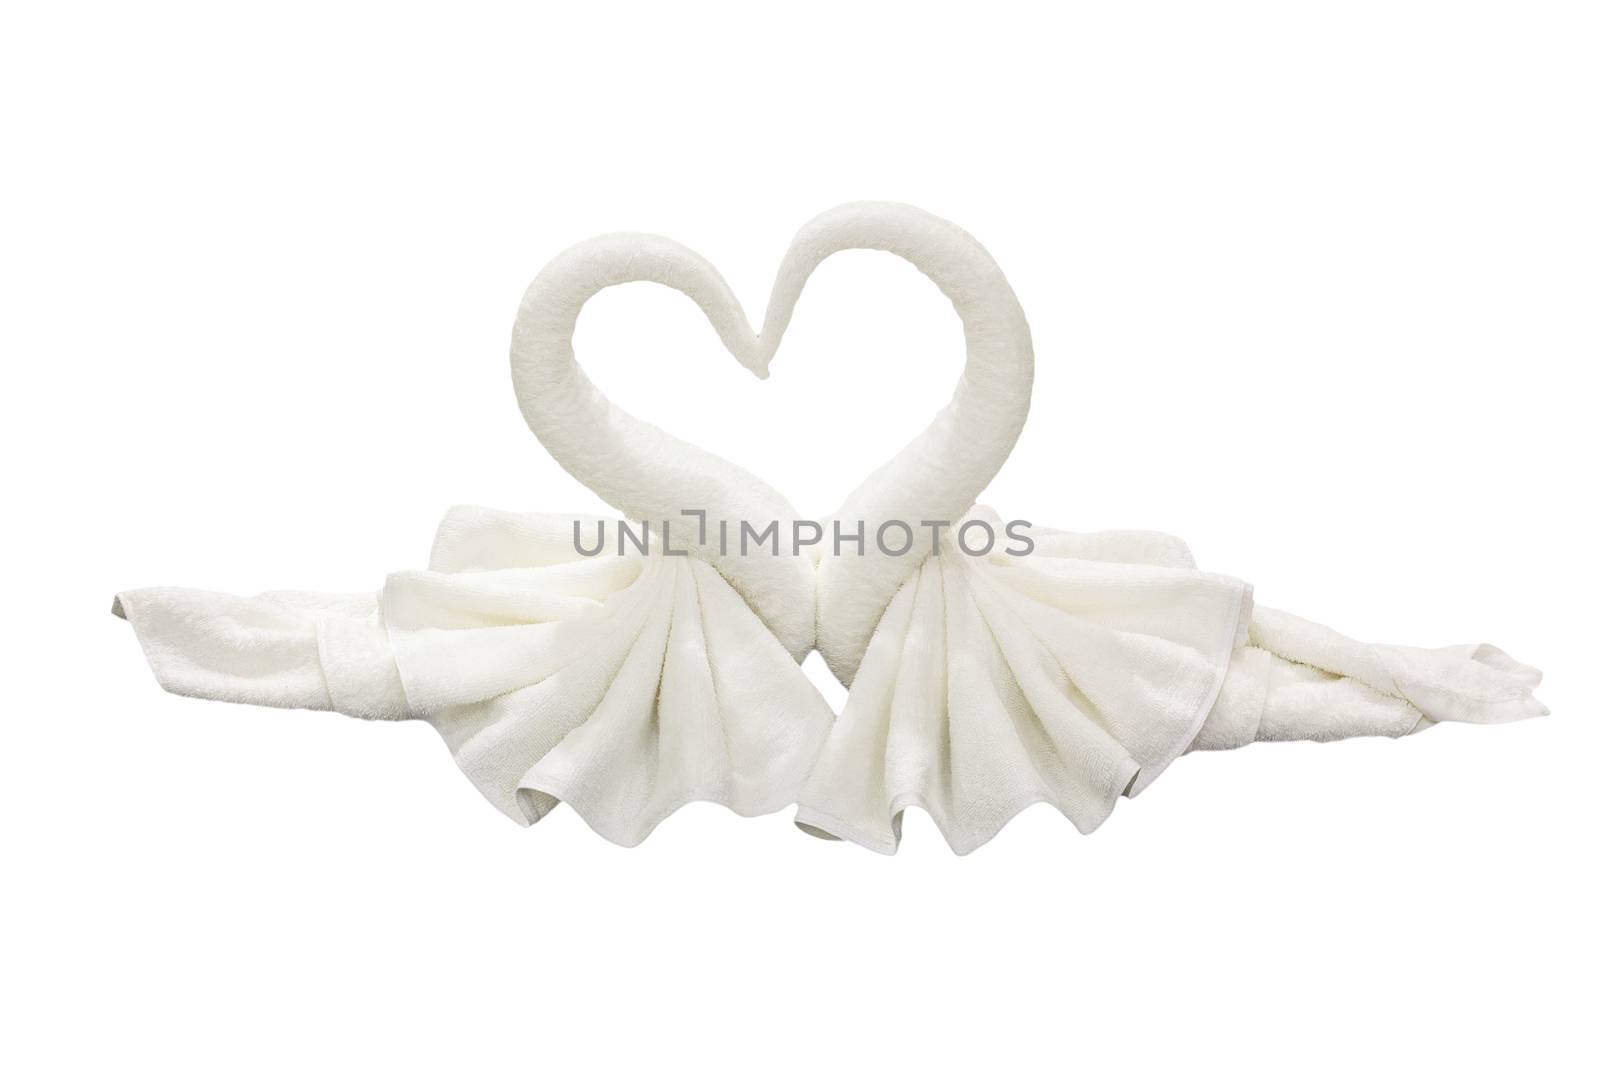 towel folded in swan shape on white background